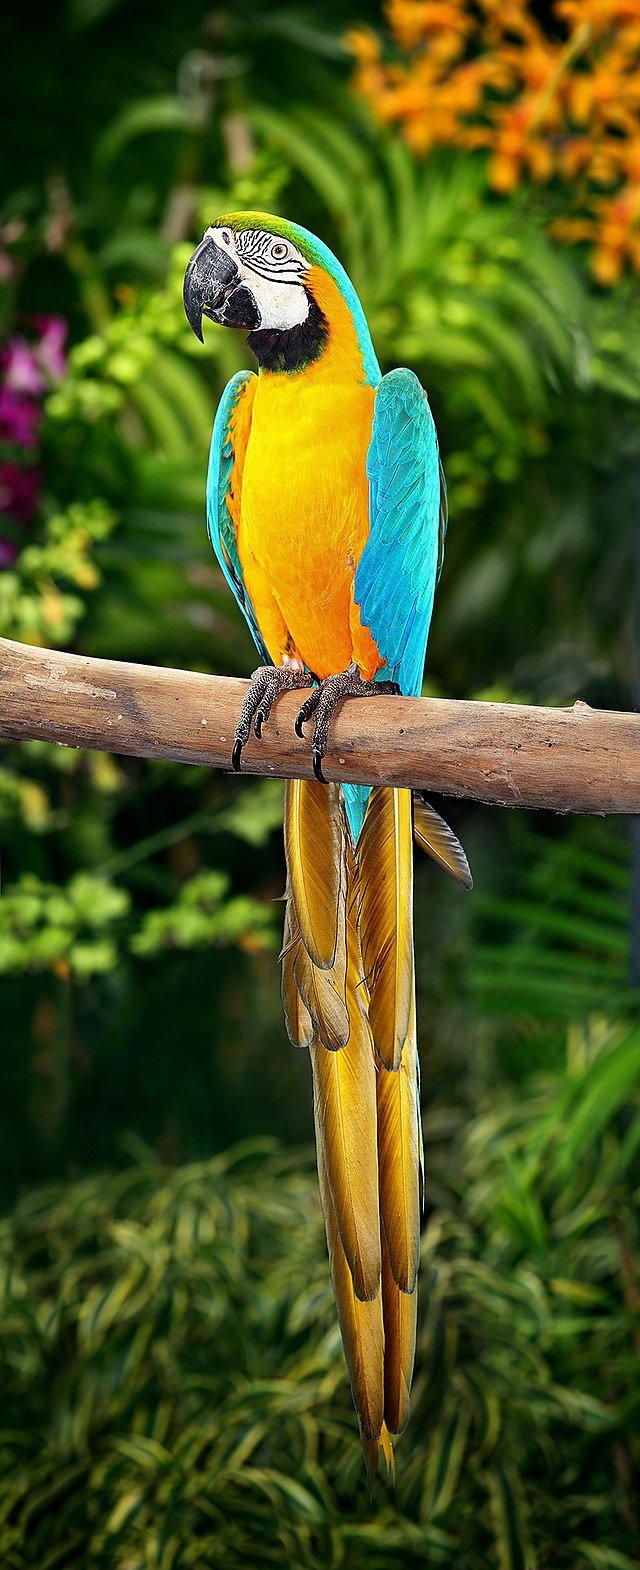 Macaw - Wikipedia